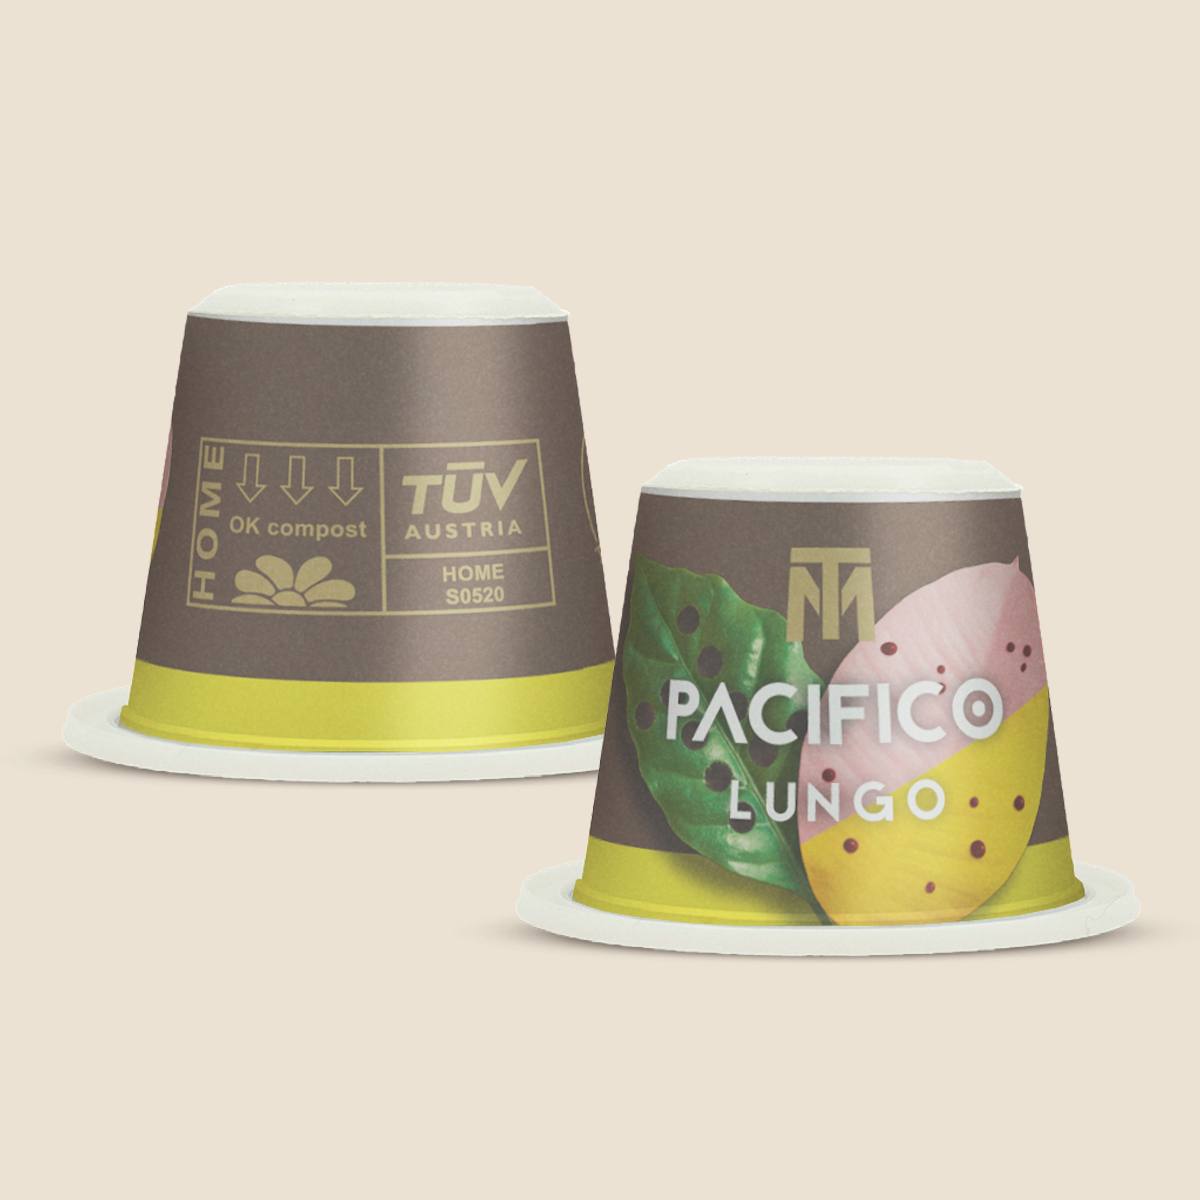 PACIFICO Decaf Organic Fair Trade Coffee Capsules refill bag